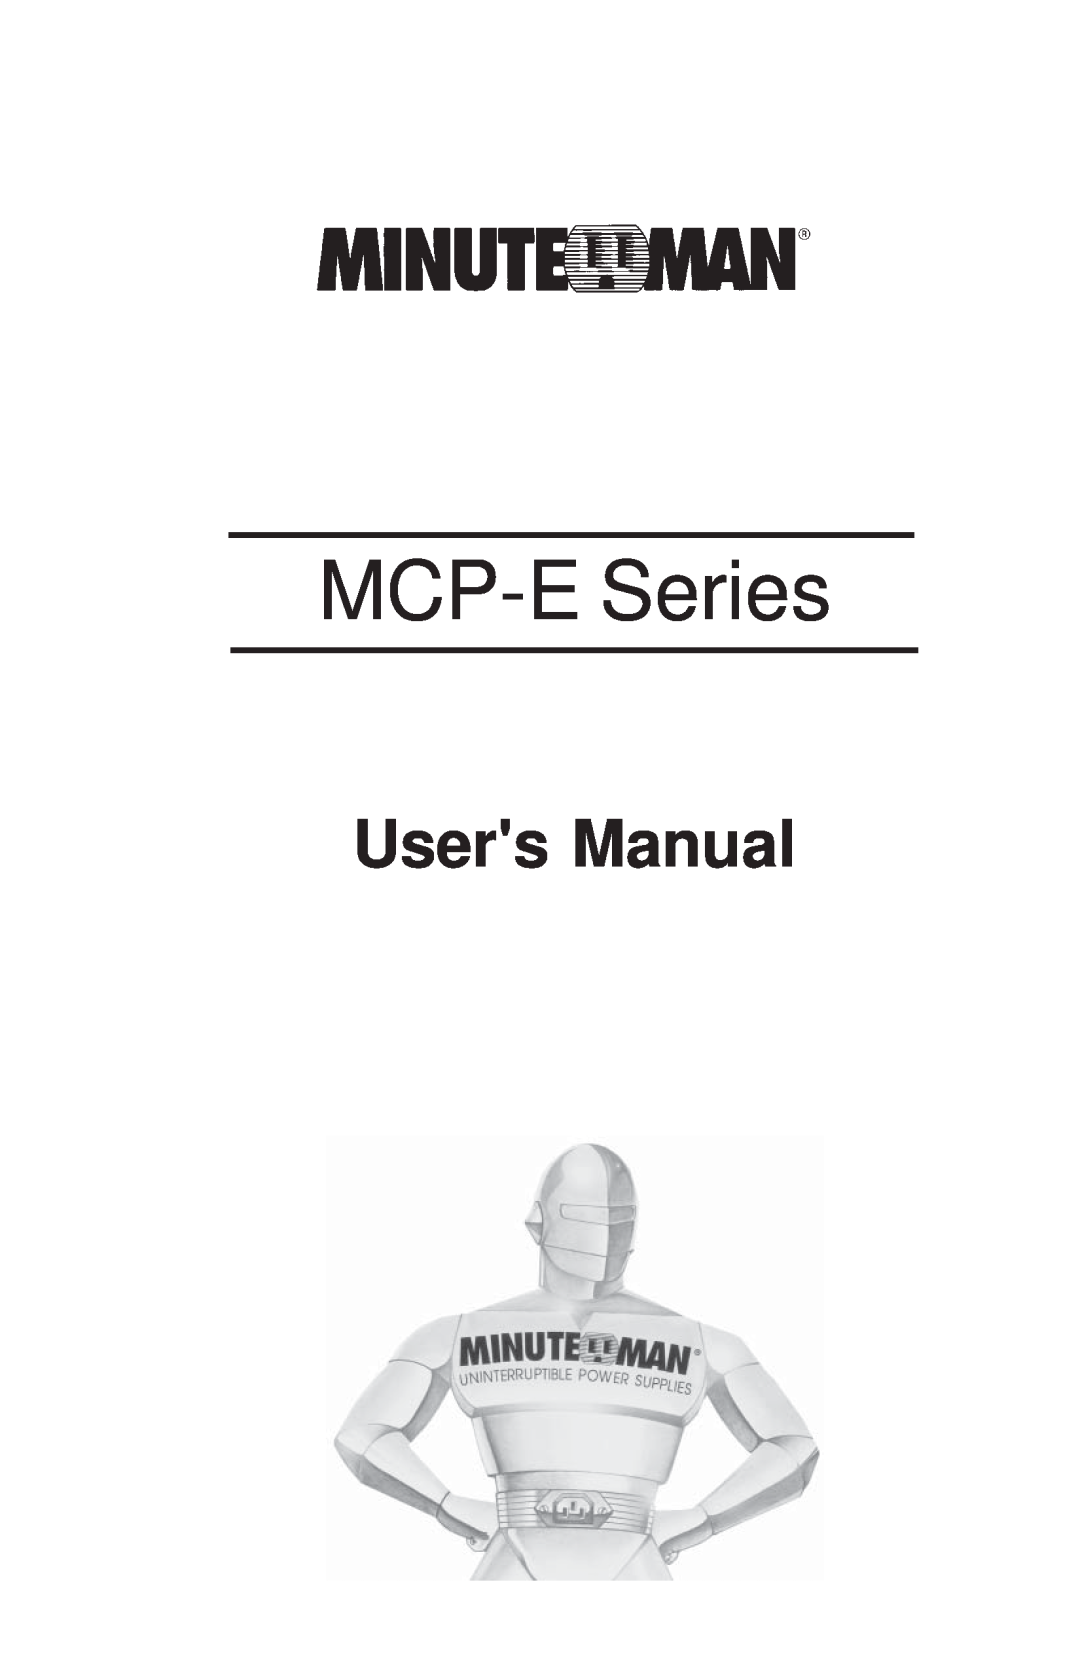 Minuteman UPS user manual MCP-E Series, Users Manual 